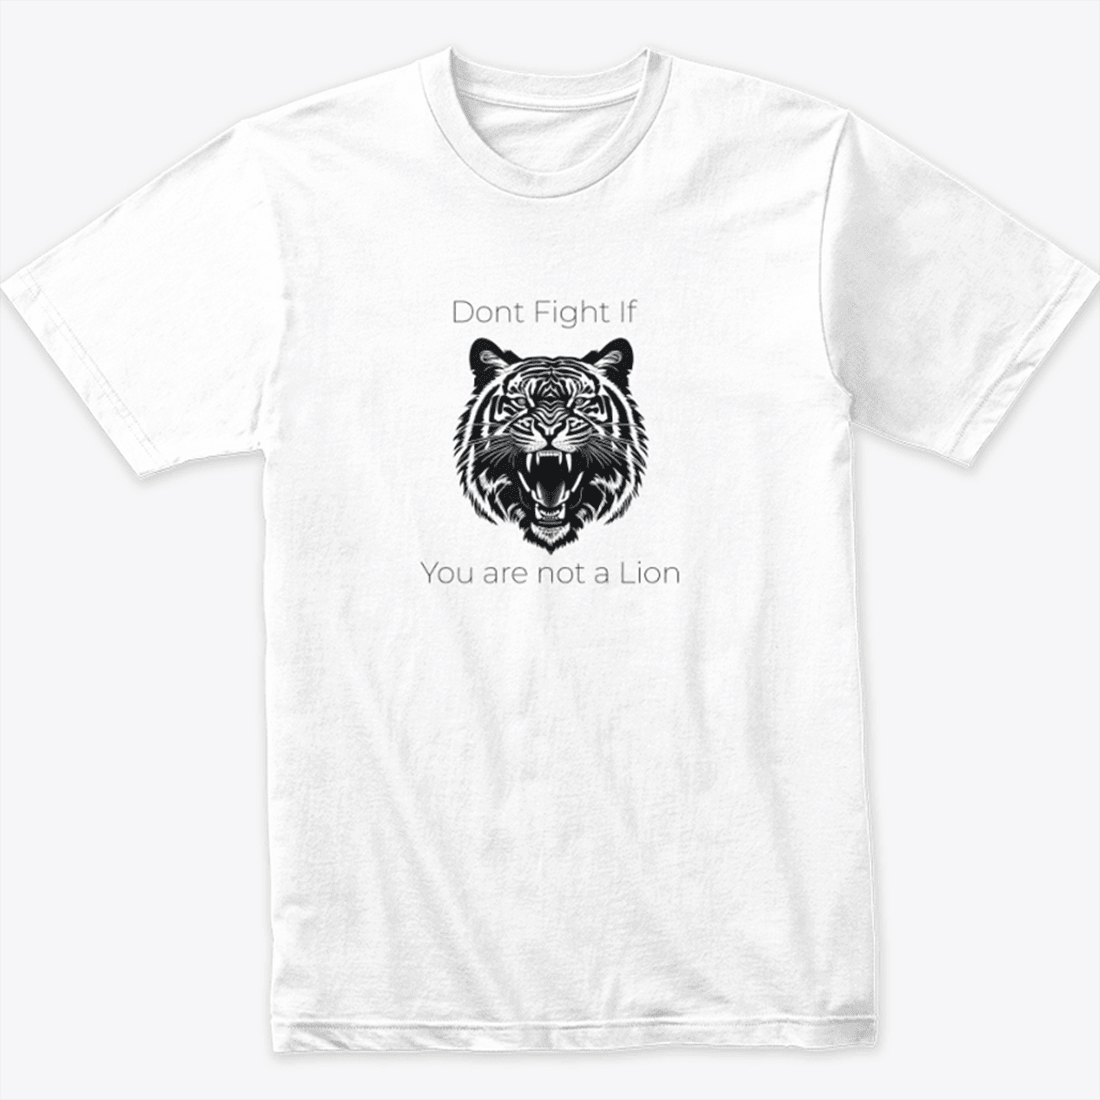 Lion Vector t shirt design cover image.